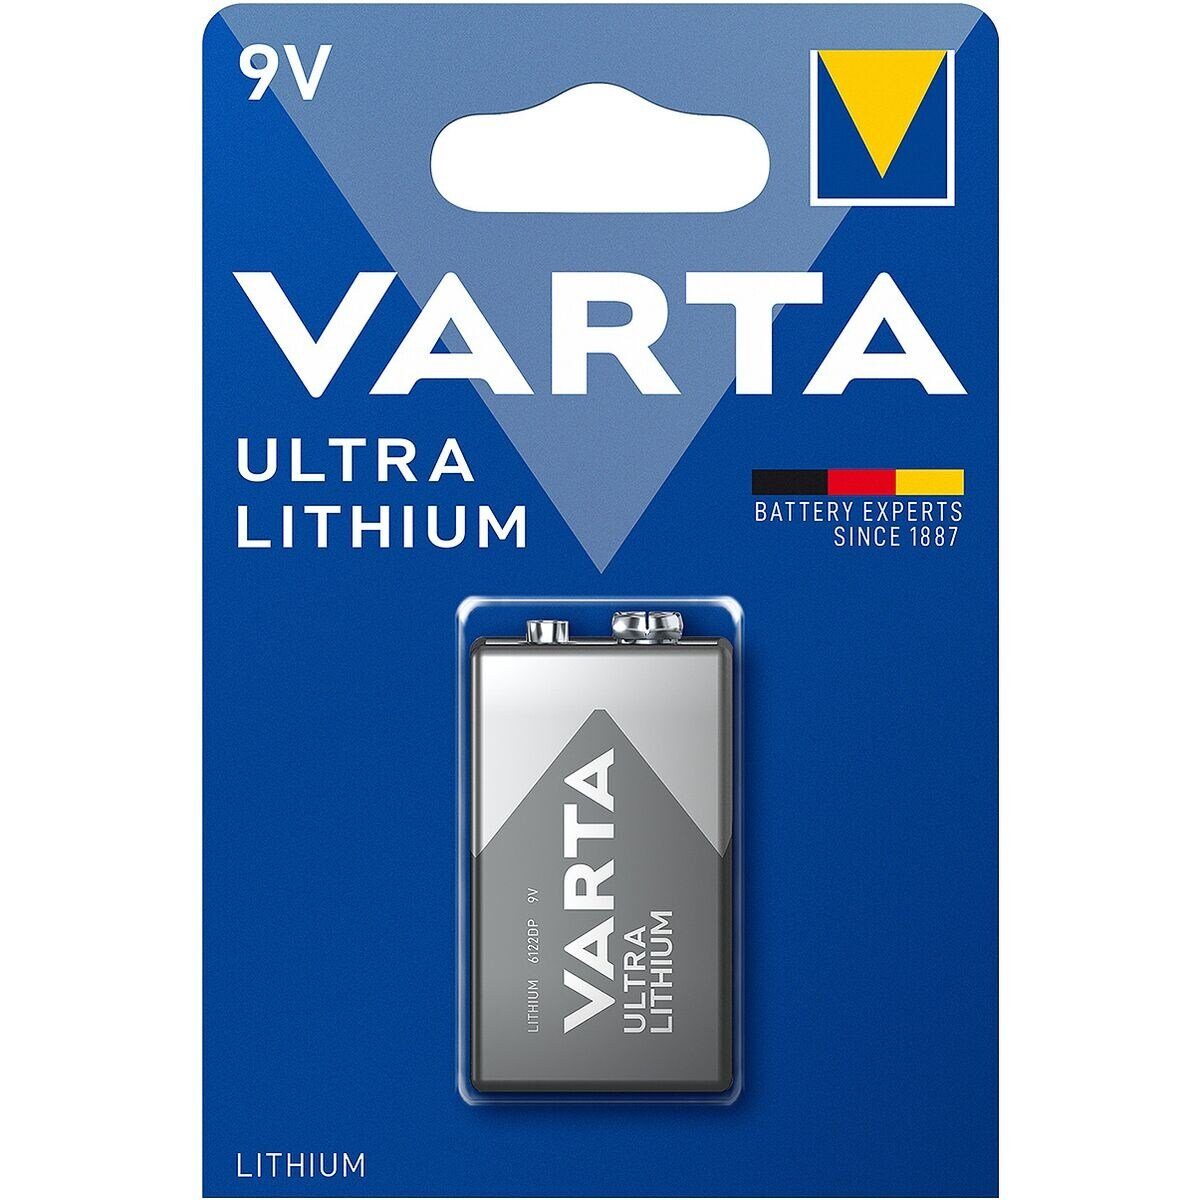 VARTA ULTRA LITHIUM Batterie, (9 V, 1 St), E-Block / 6LR61, 9 V, Lithium Primär